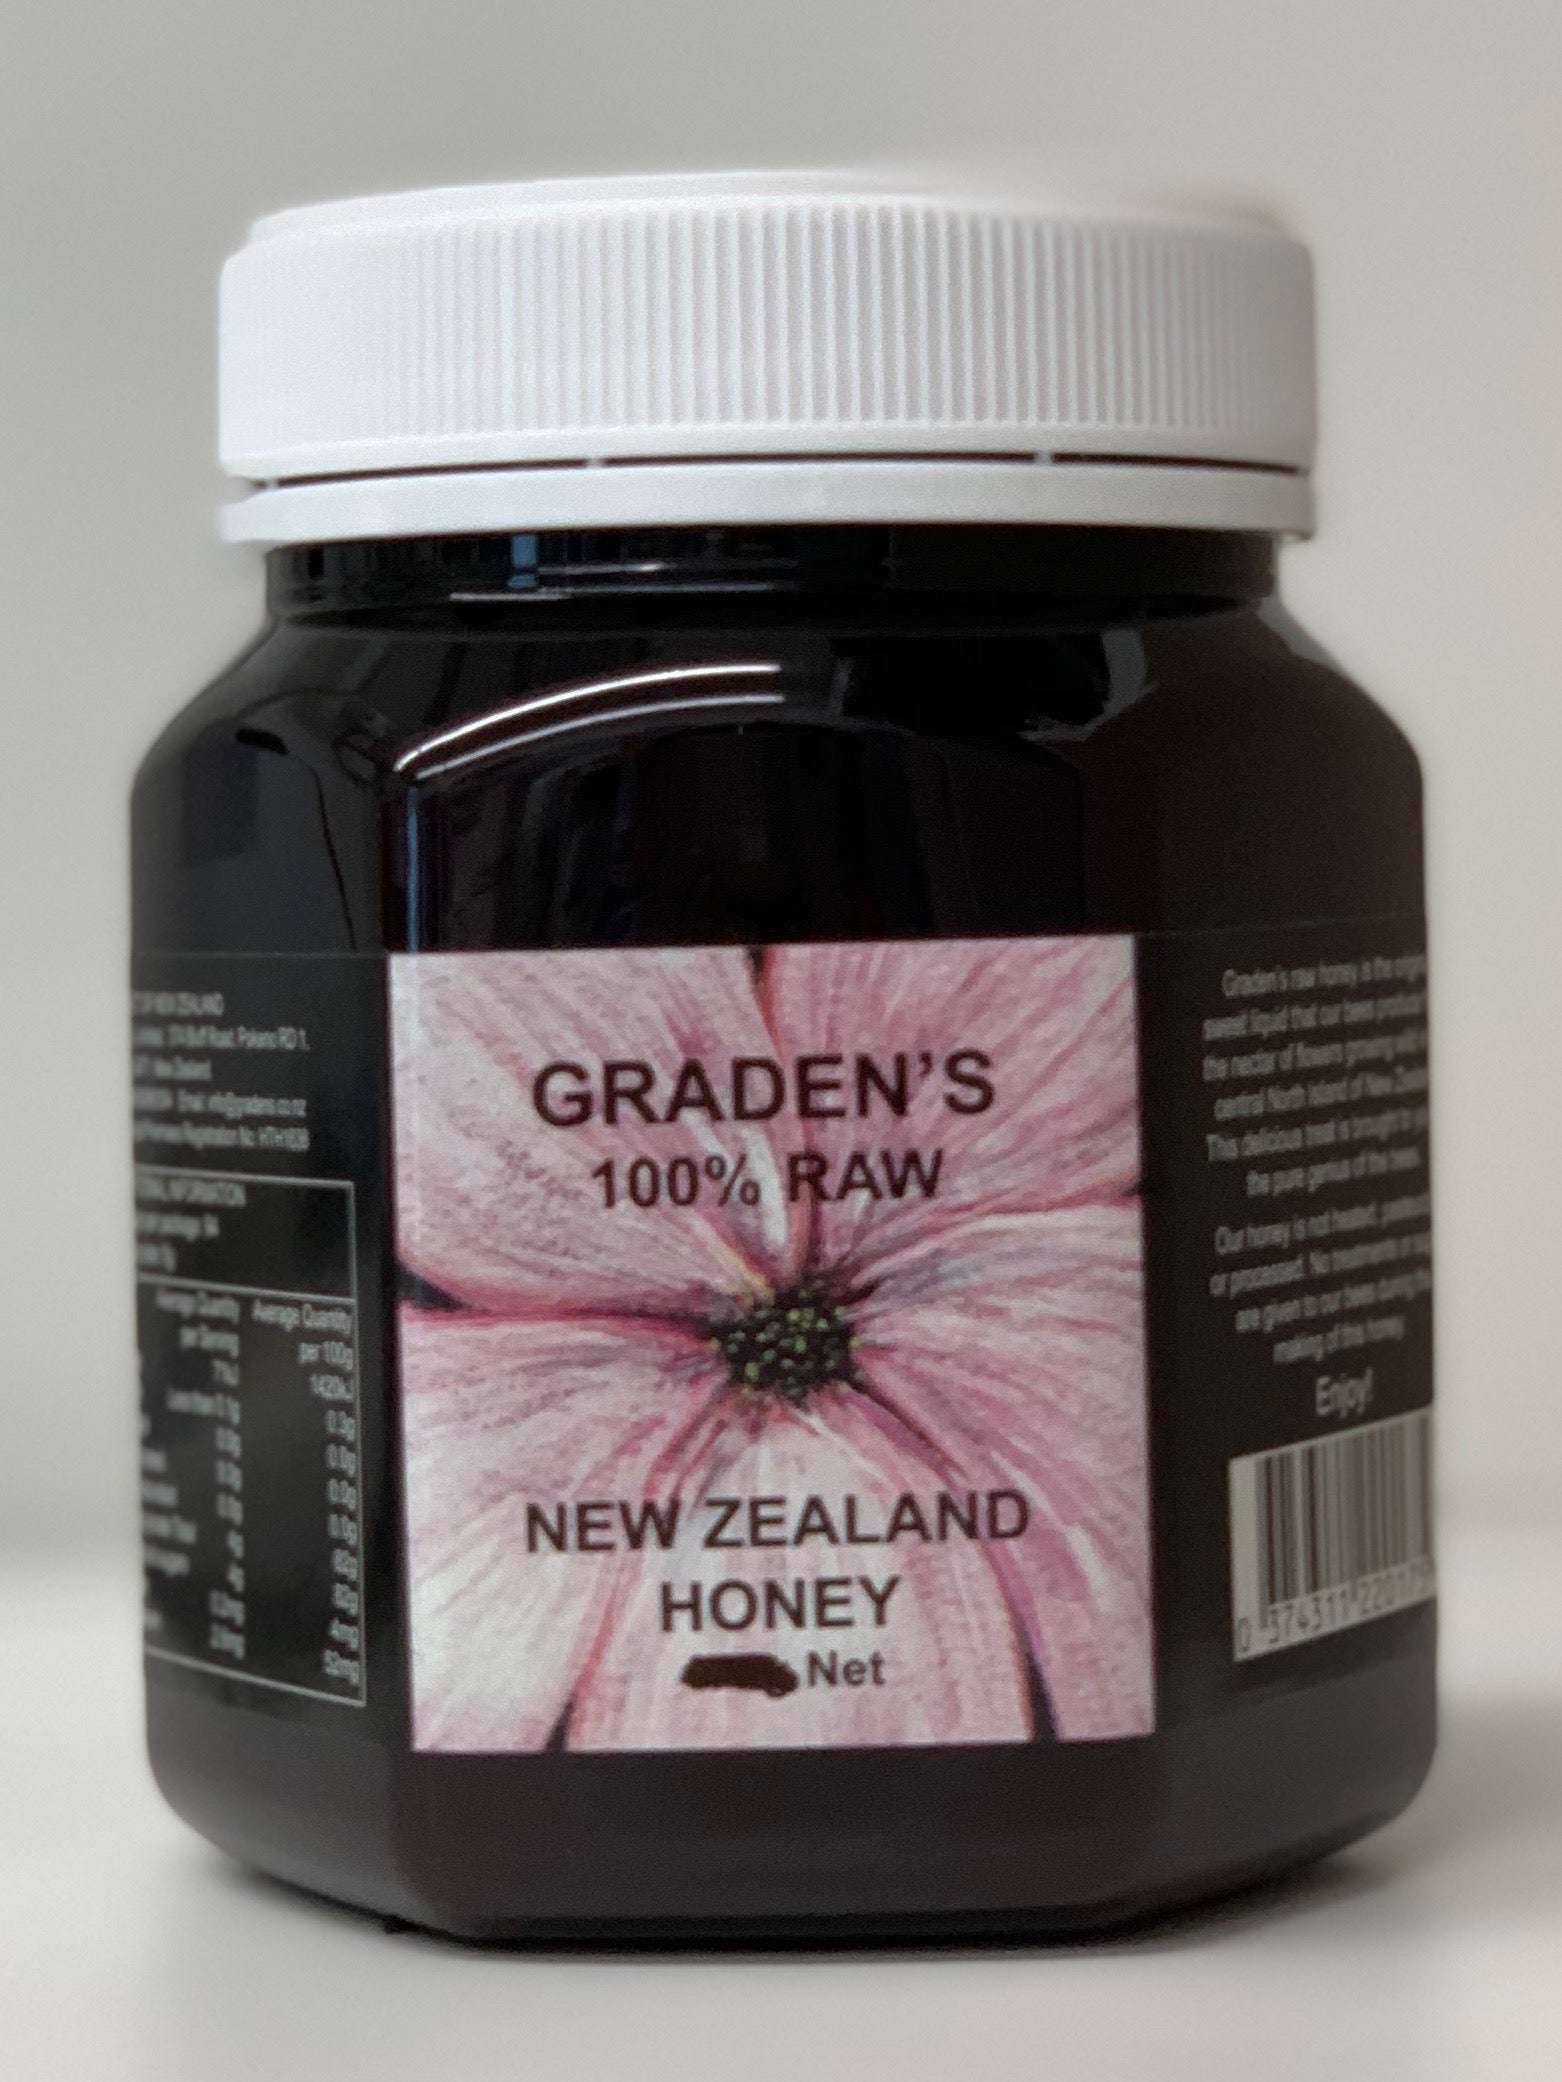 Graden's 100% Raw New Zealand Honey 1kg